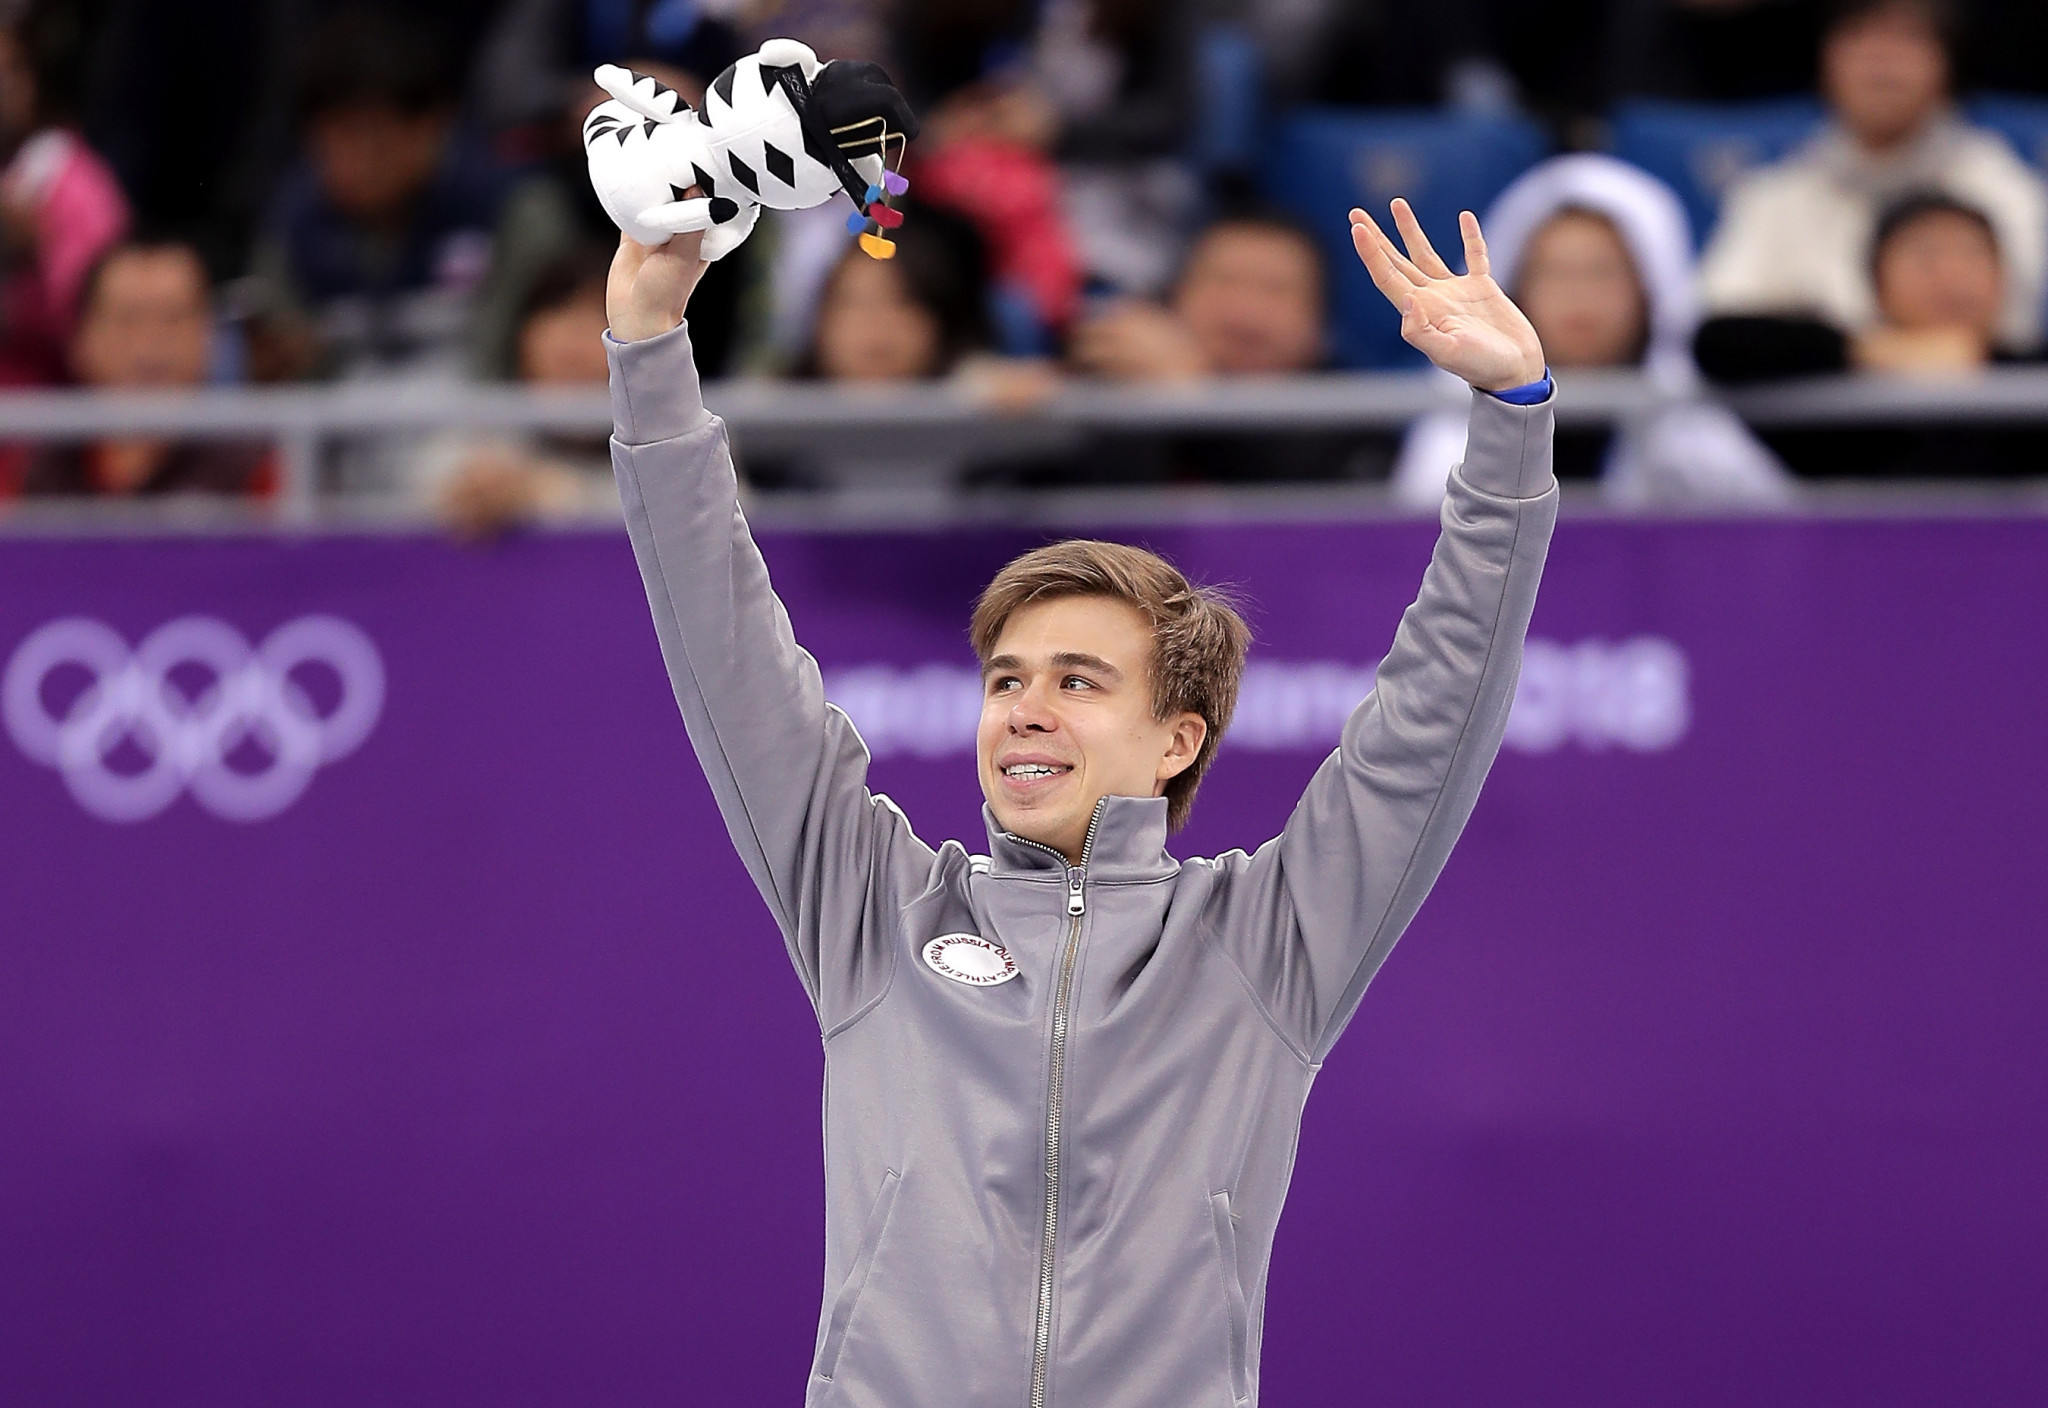 IOC defend presence of OAR medallist at Pyeongchang 2018 after meldonium positive